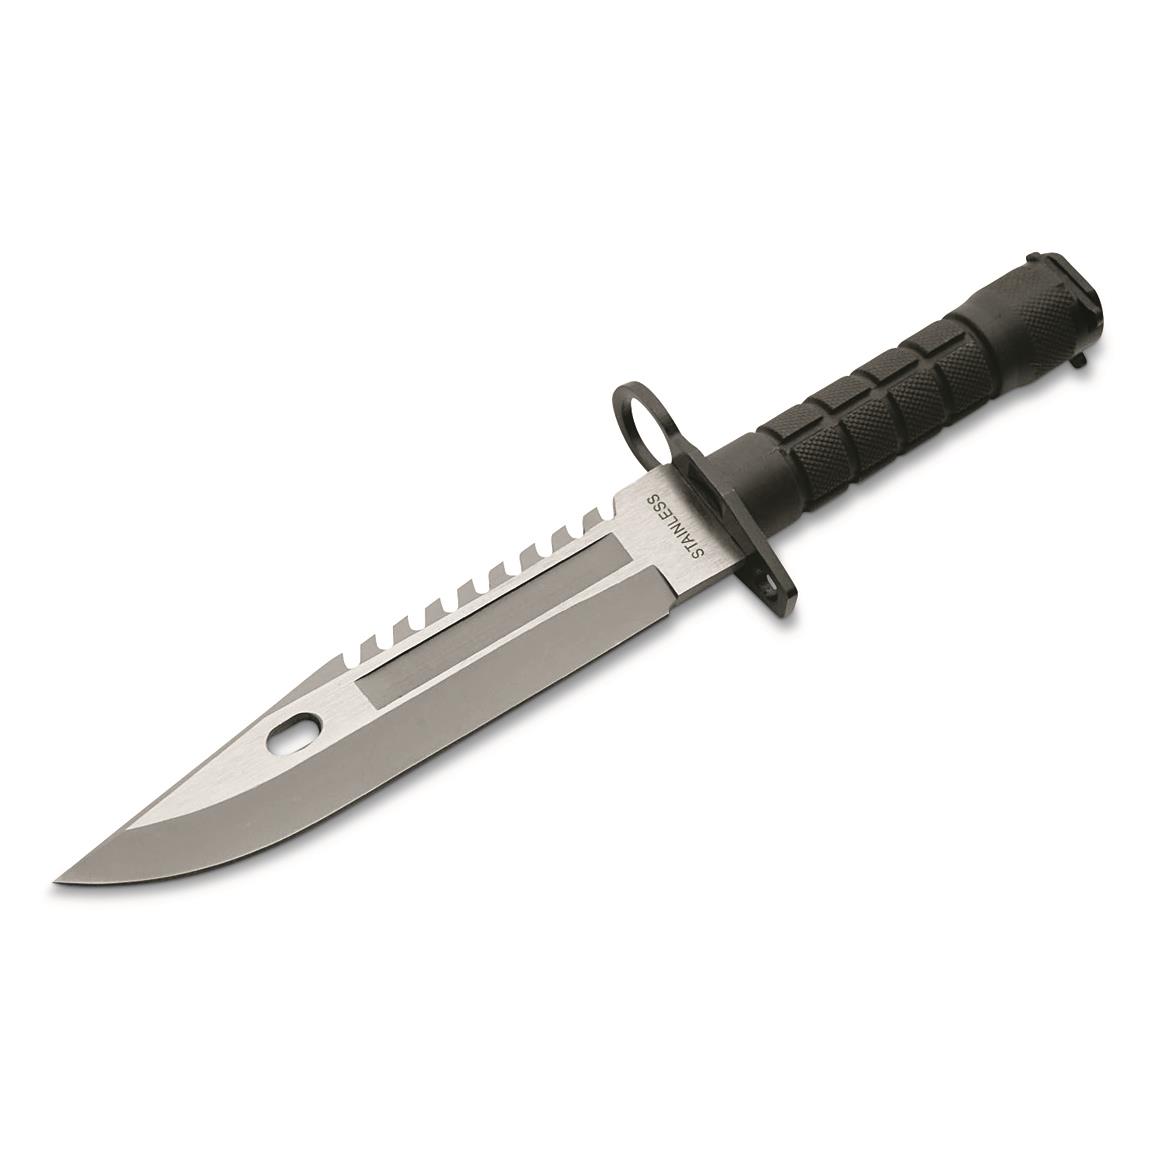 Military Style M9 12.75" Bayonet Knife with Sheath